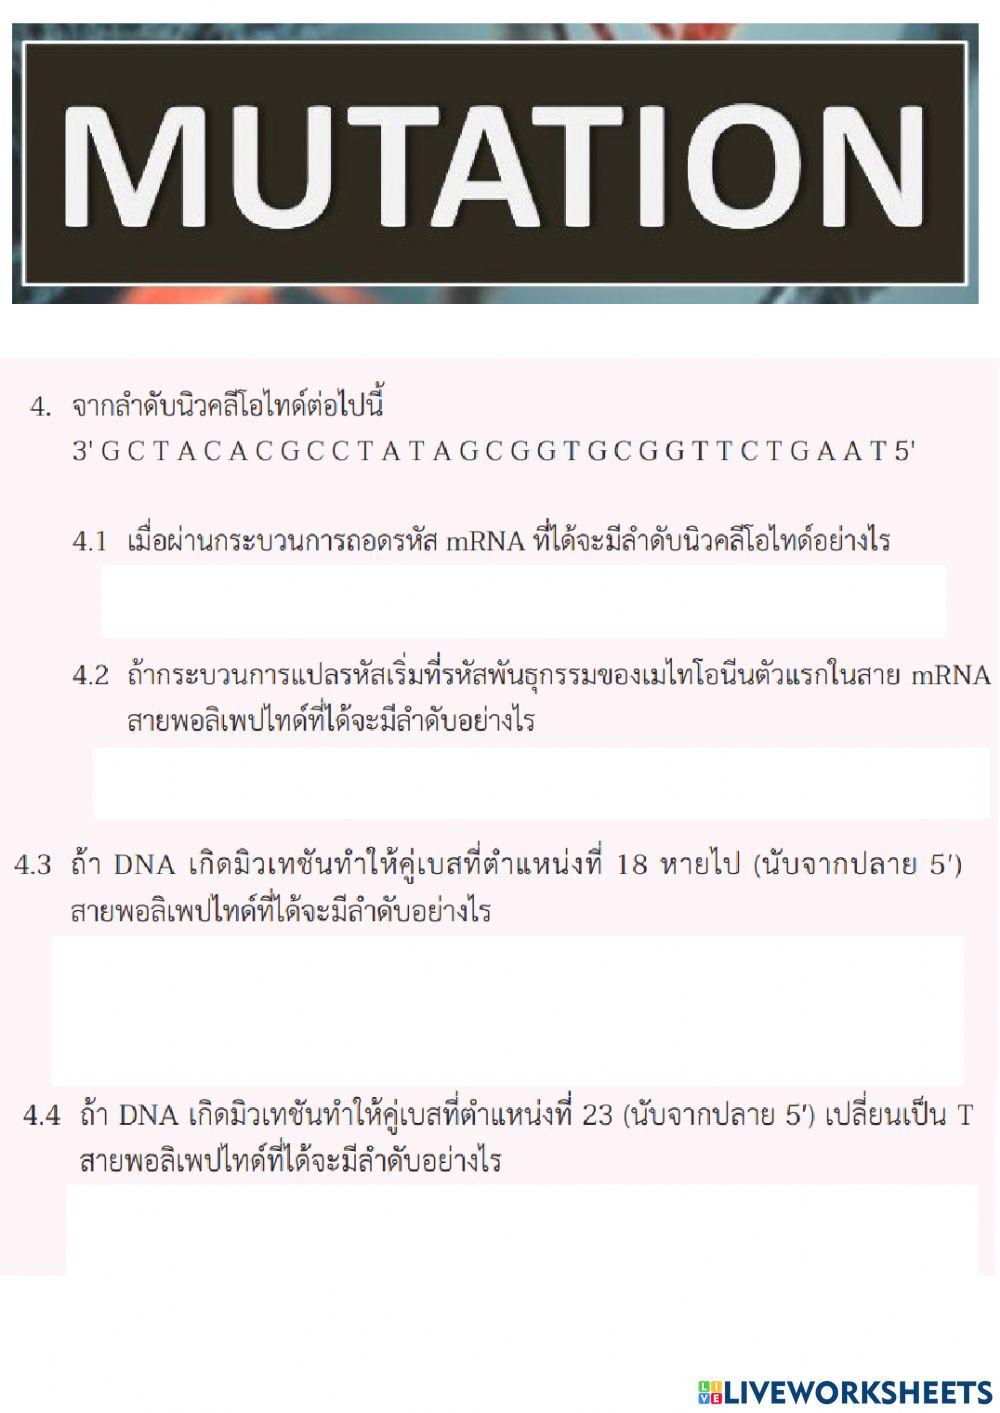 Mutation1